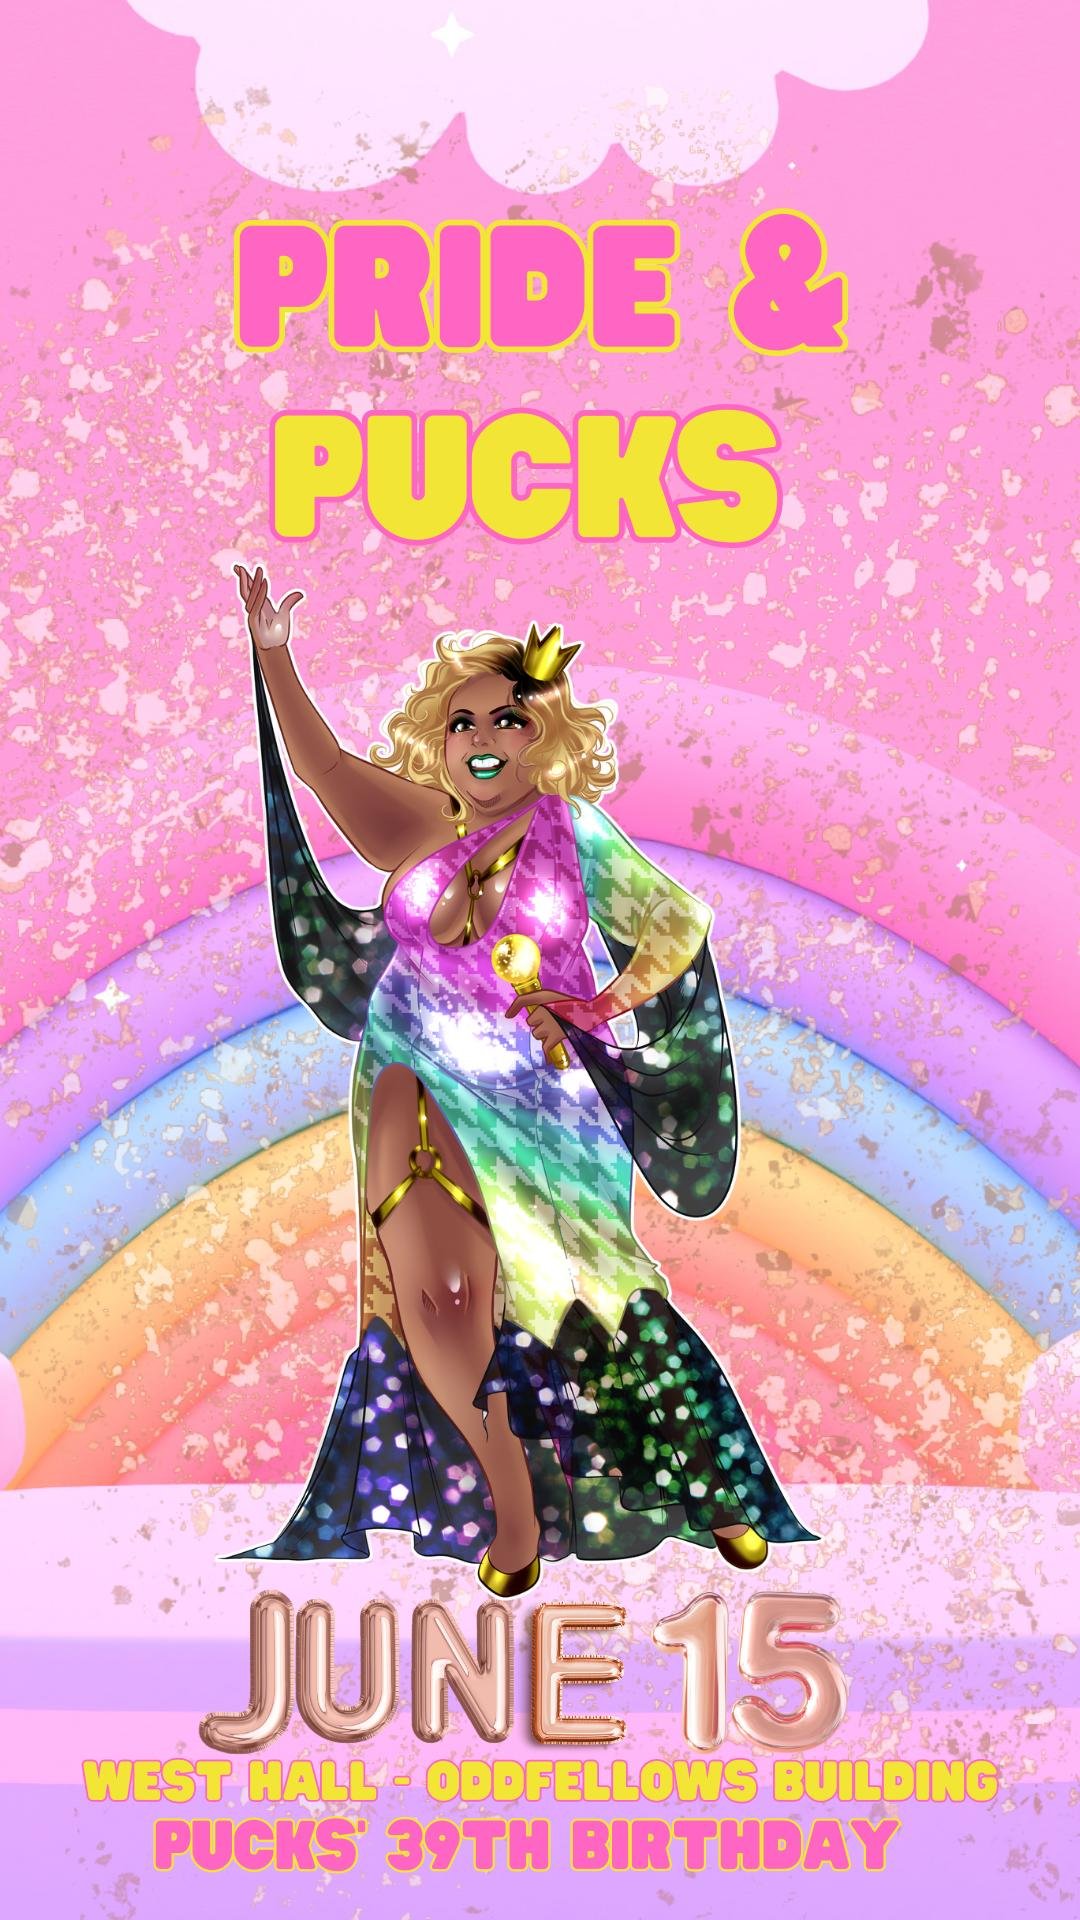 June 15: Puckduction Presents "Pride &amp; Pucks" (Seattle, WA)